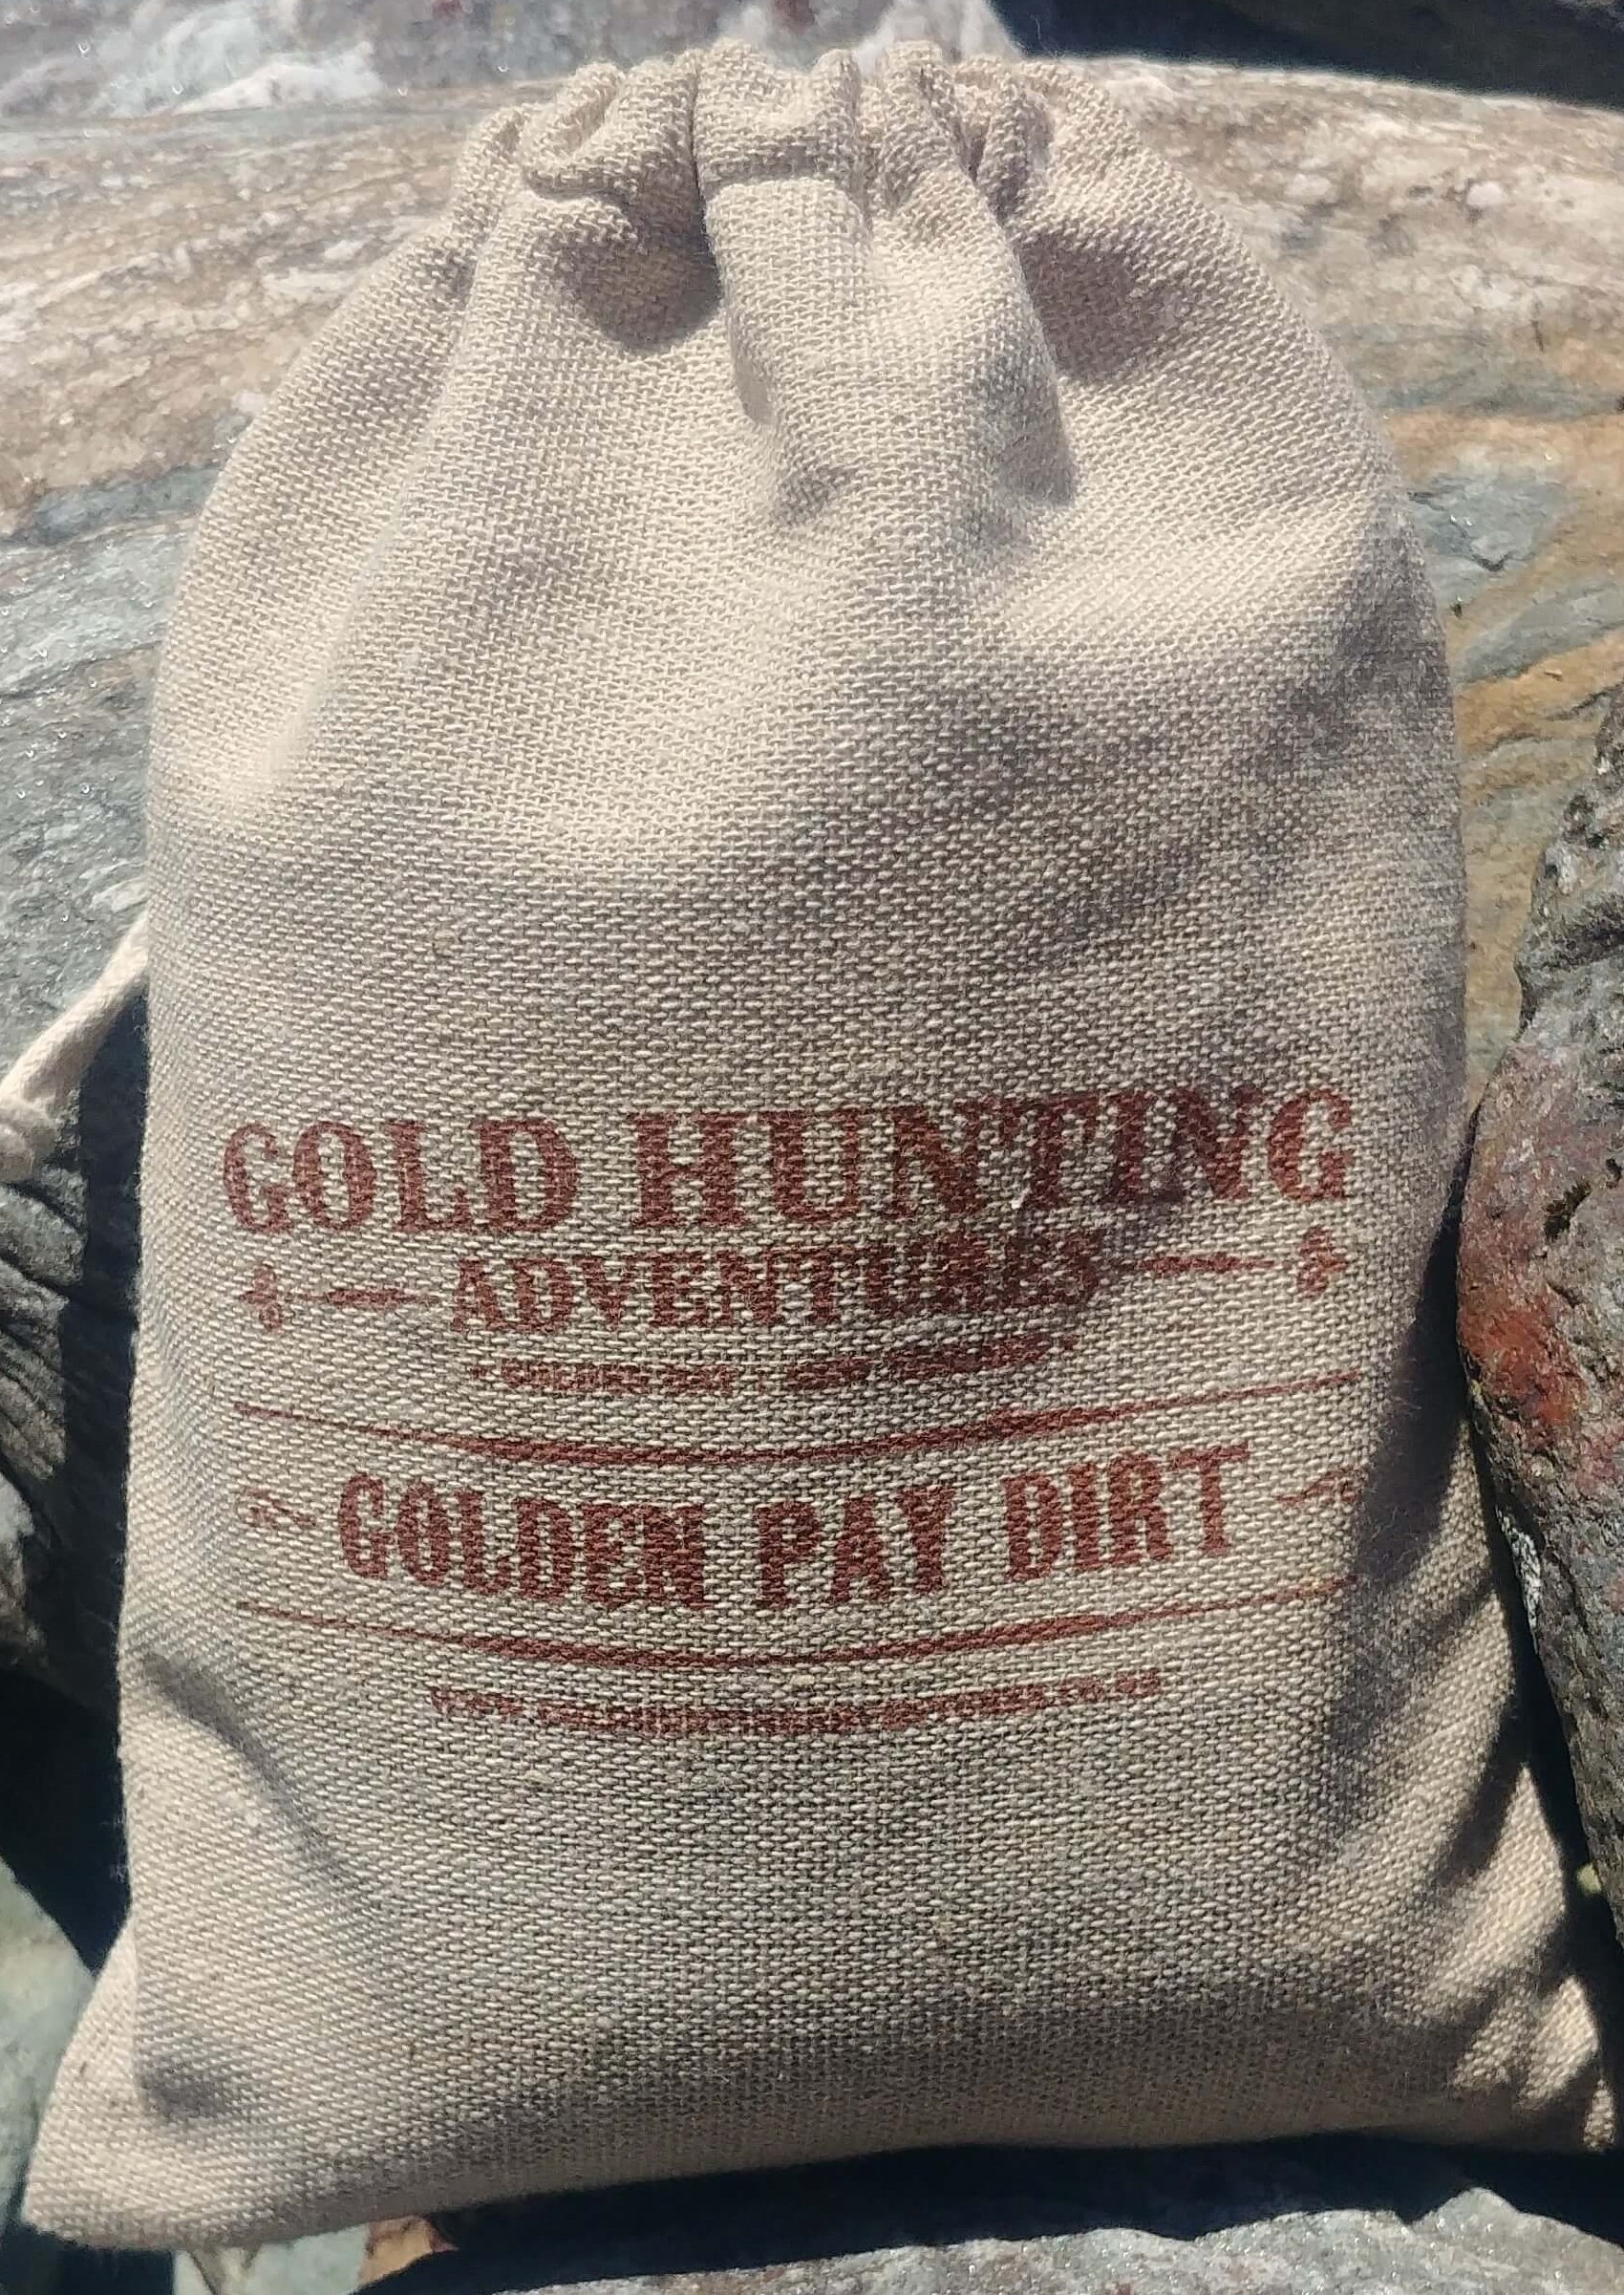 Pay Dirt Bag